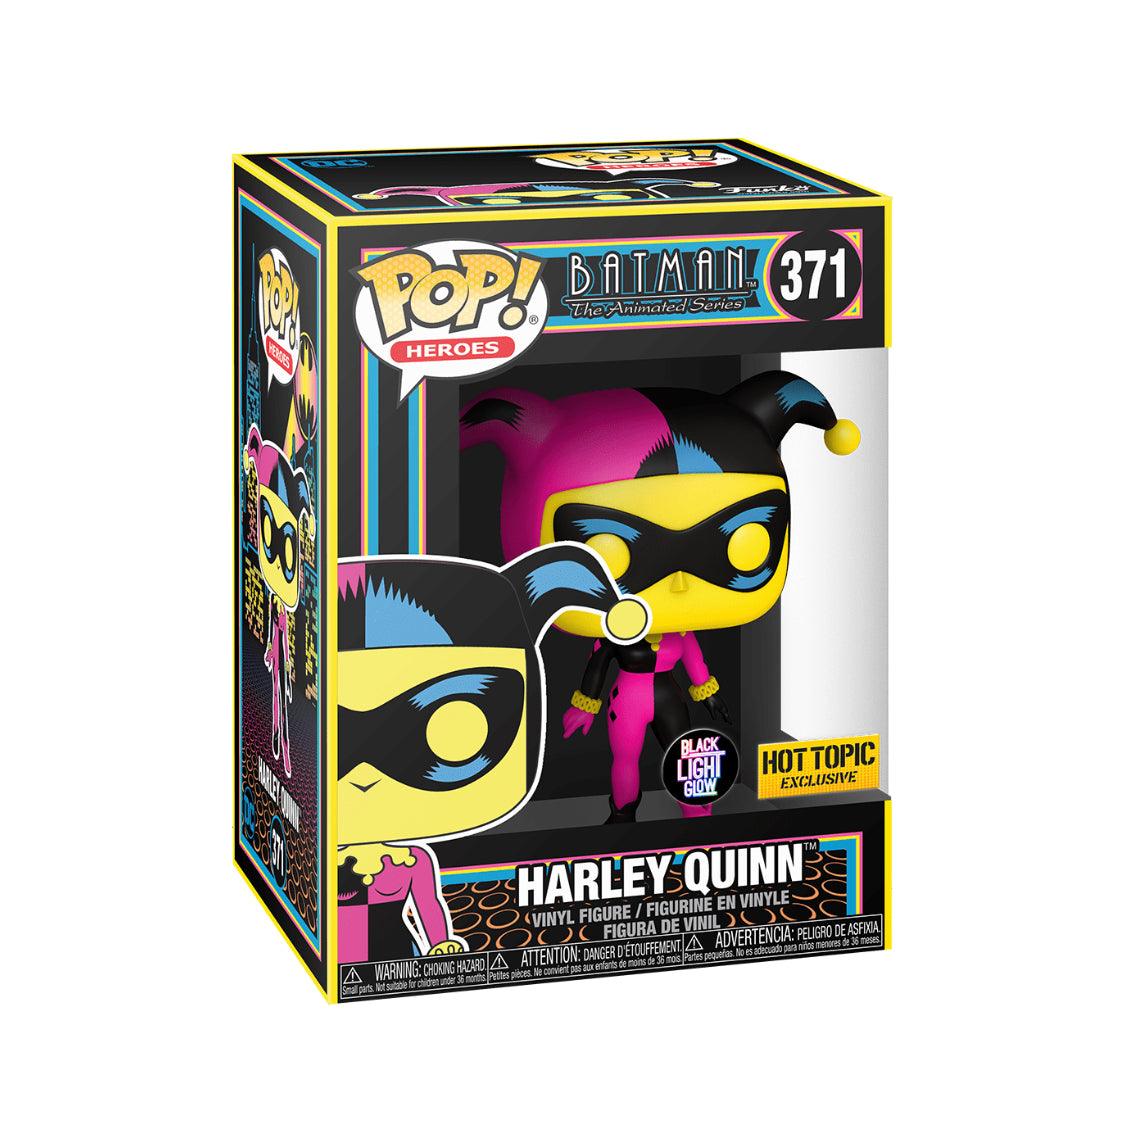 Pop! Heroes - DC - Batman Animated Series - Harley Quinn - #371 - Black Light Glow & Hot Topic Edition - Hobby Champion Inc